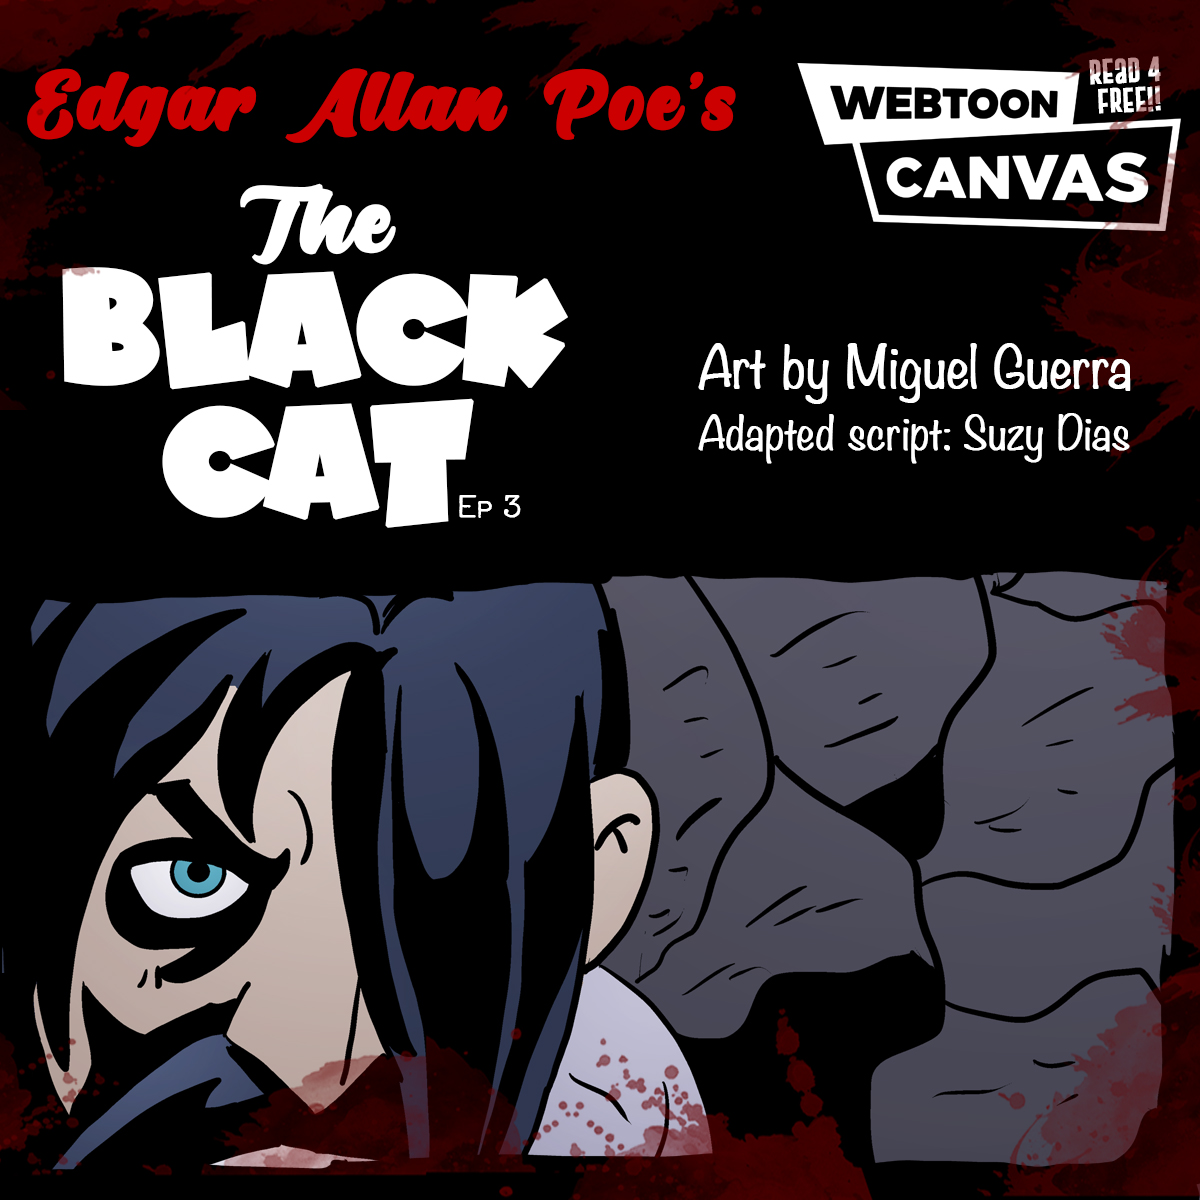 Ghost Metal on Webtoon: The Black Cat ep3